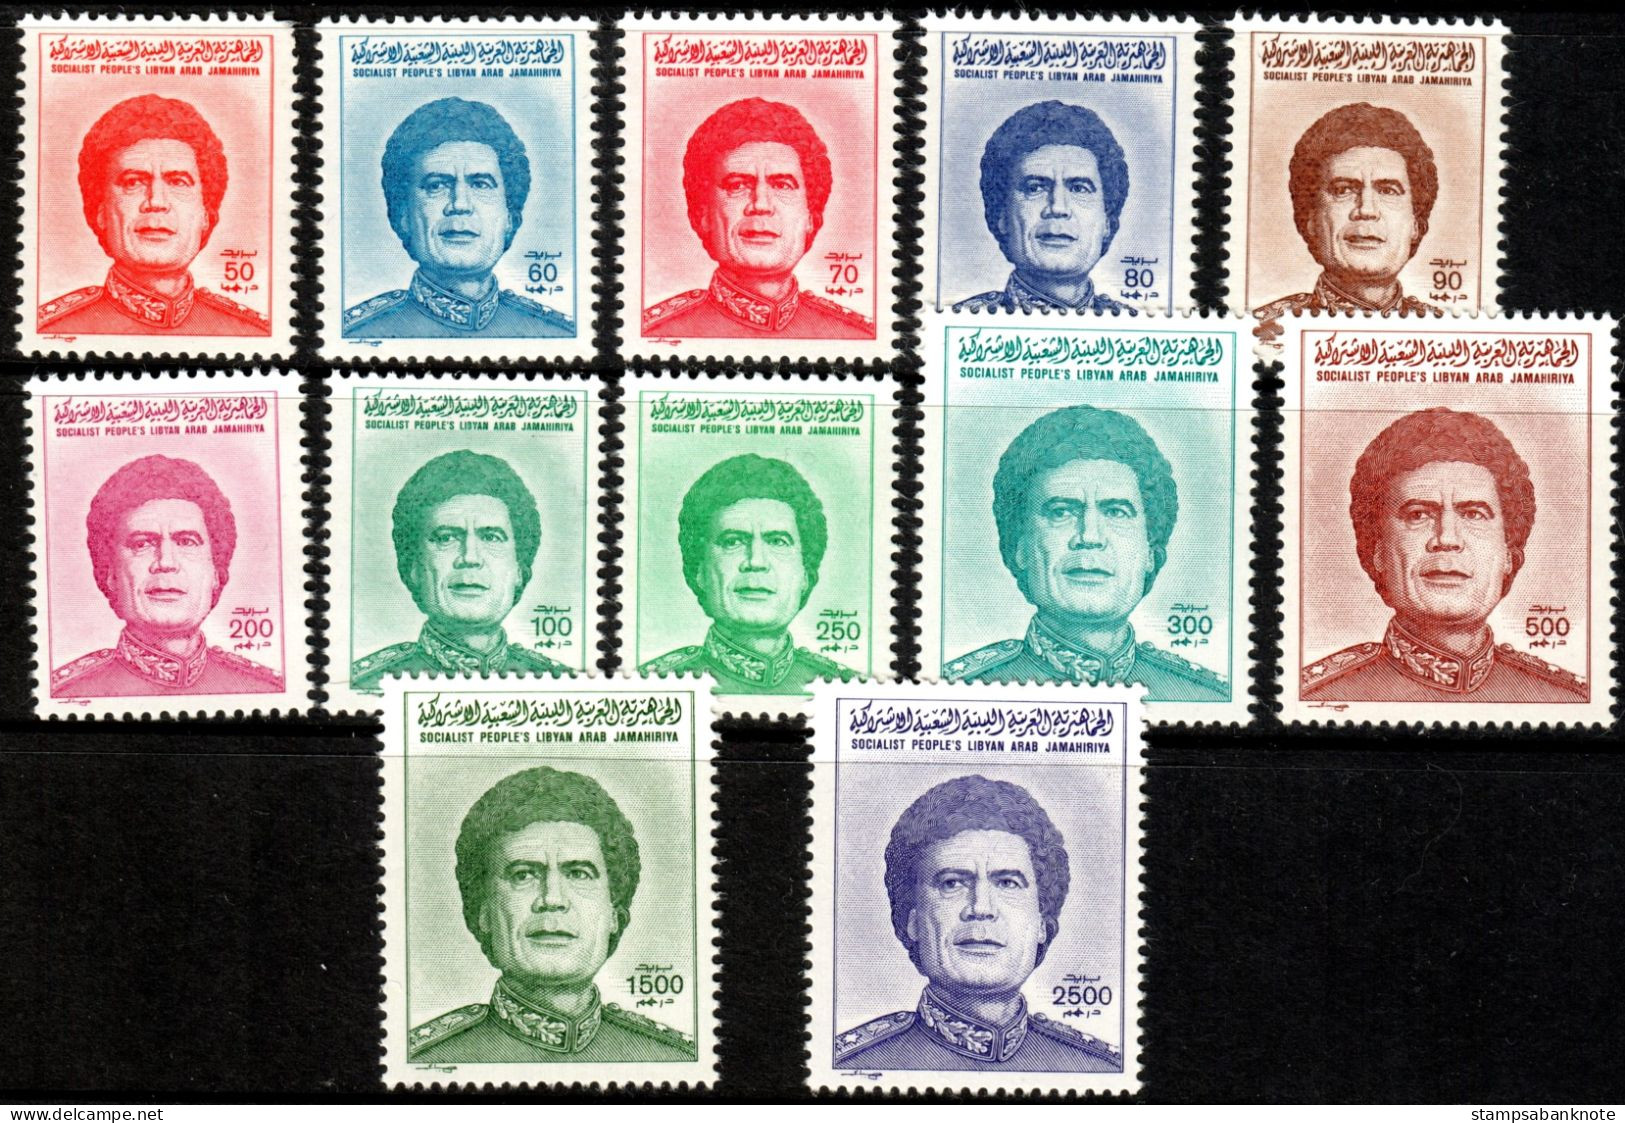 LIBYA ,  1986 Complete Set 12 Stamps Gaddafi -  MNH - WITHDRAWN Stamps (( Scarce )) - Libya